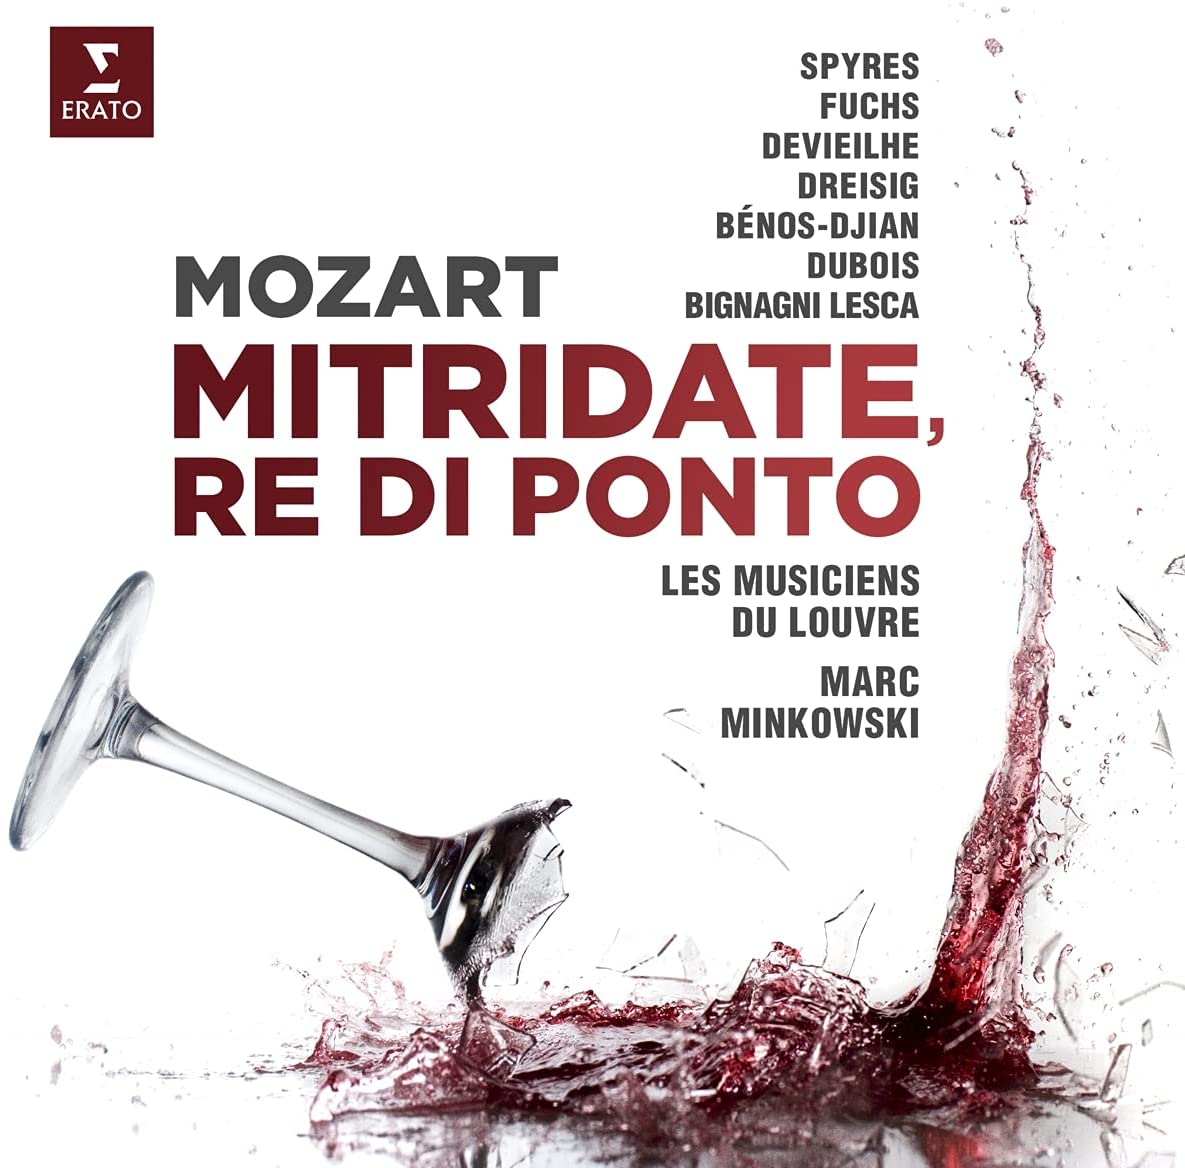 CD cover Minkoski Mozart Mitridate, Re di Ponto